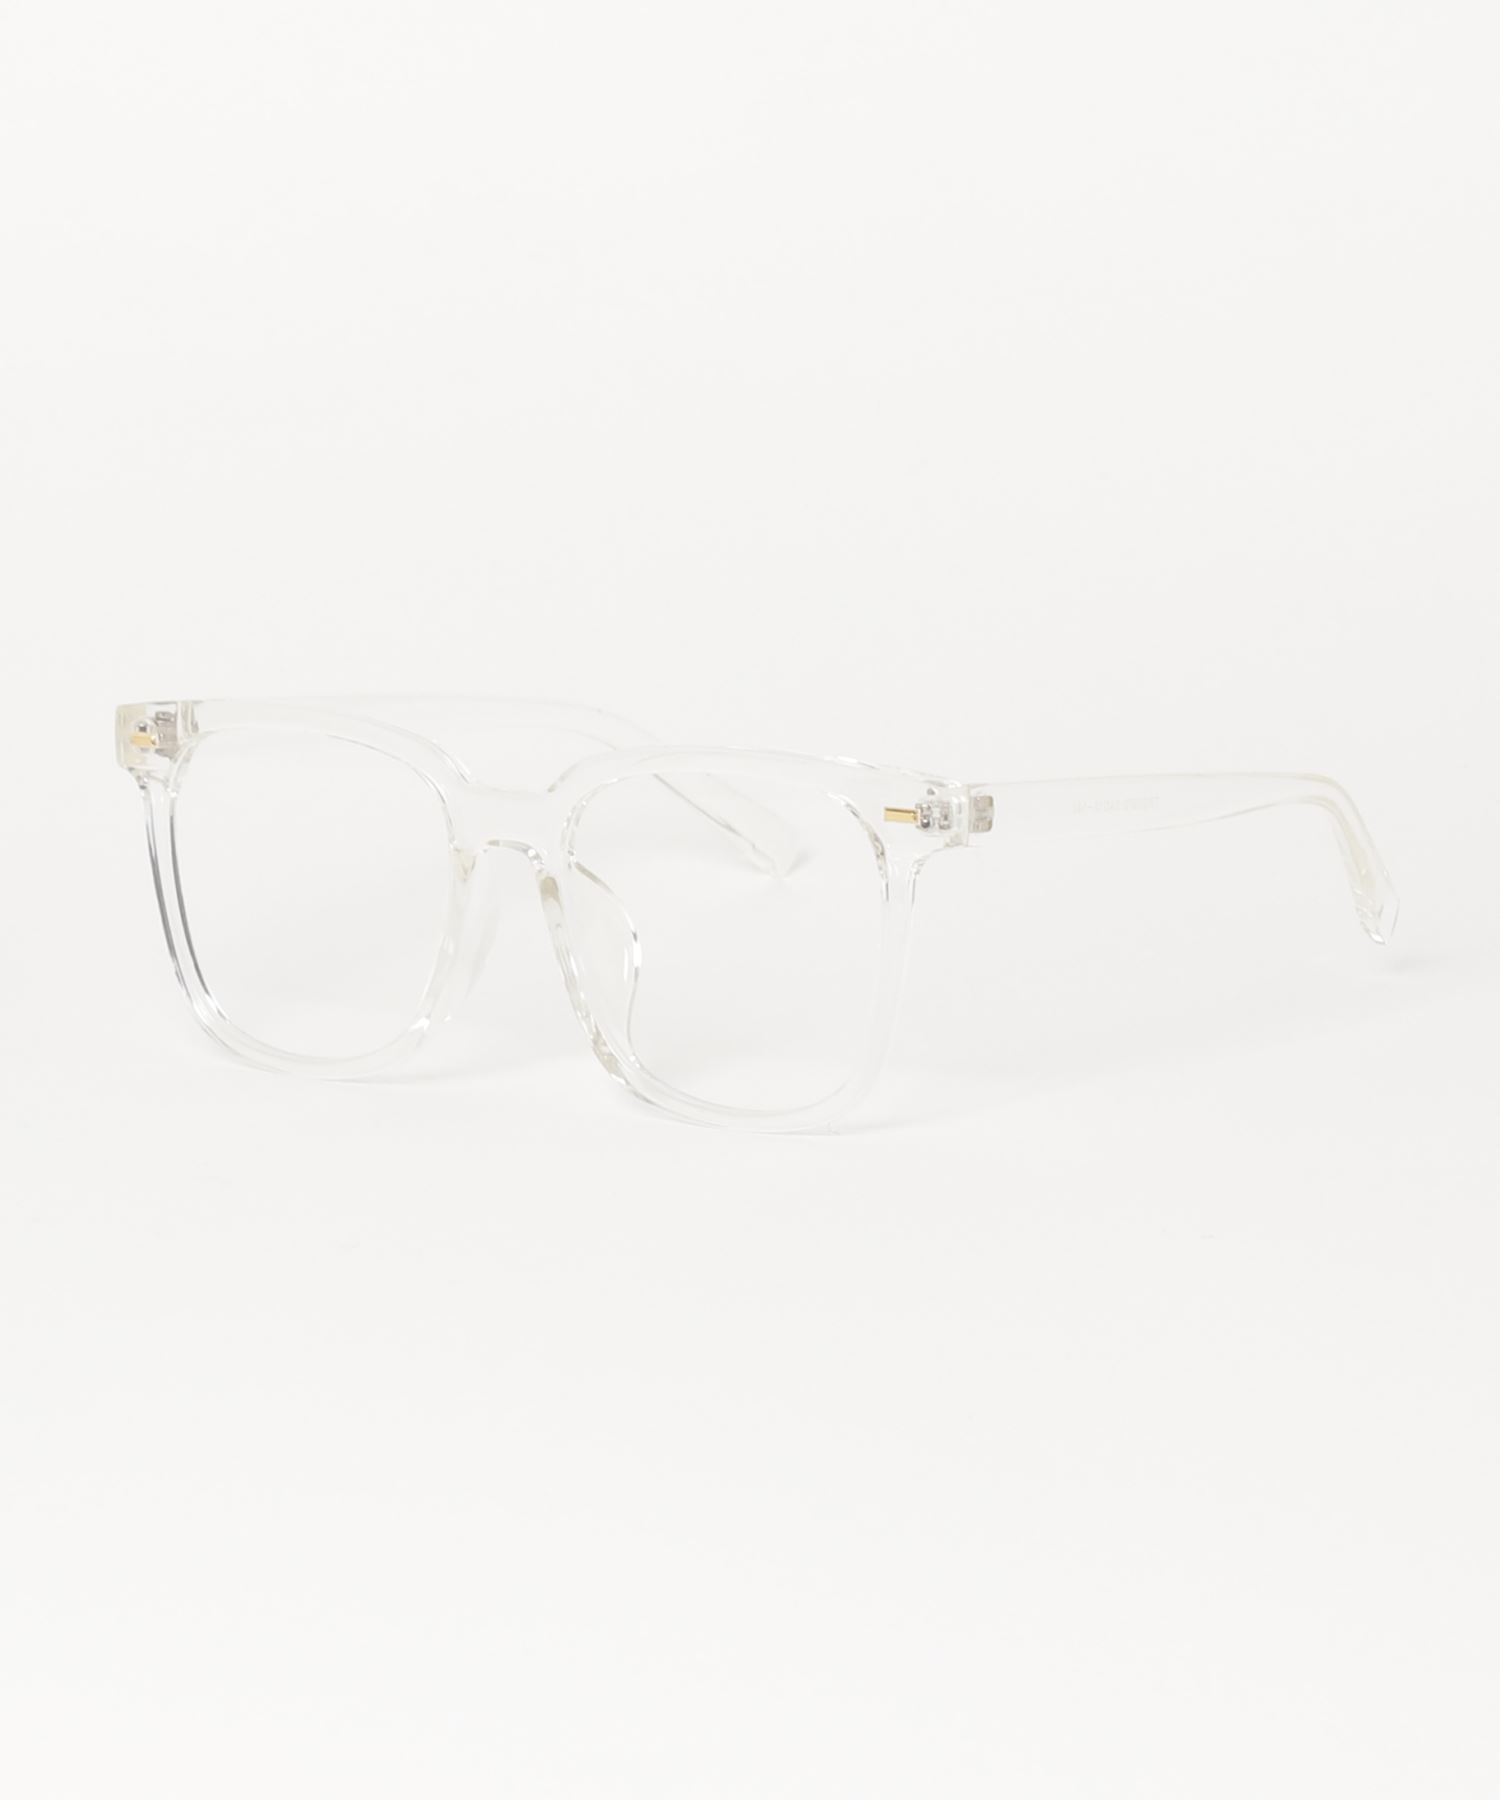 A'GEM/9 × .kom『.kom SELECT/ドットケーオーエムセレクト』Big Flame Fashion Glass/ビックフレーム ファッション眼鏡 メガネ